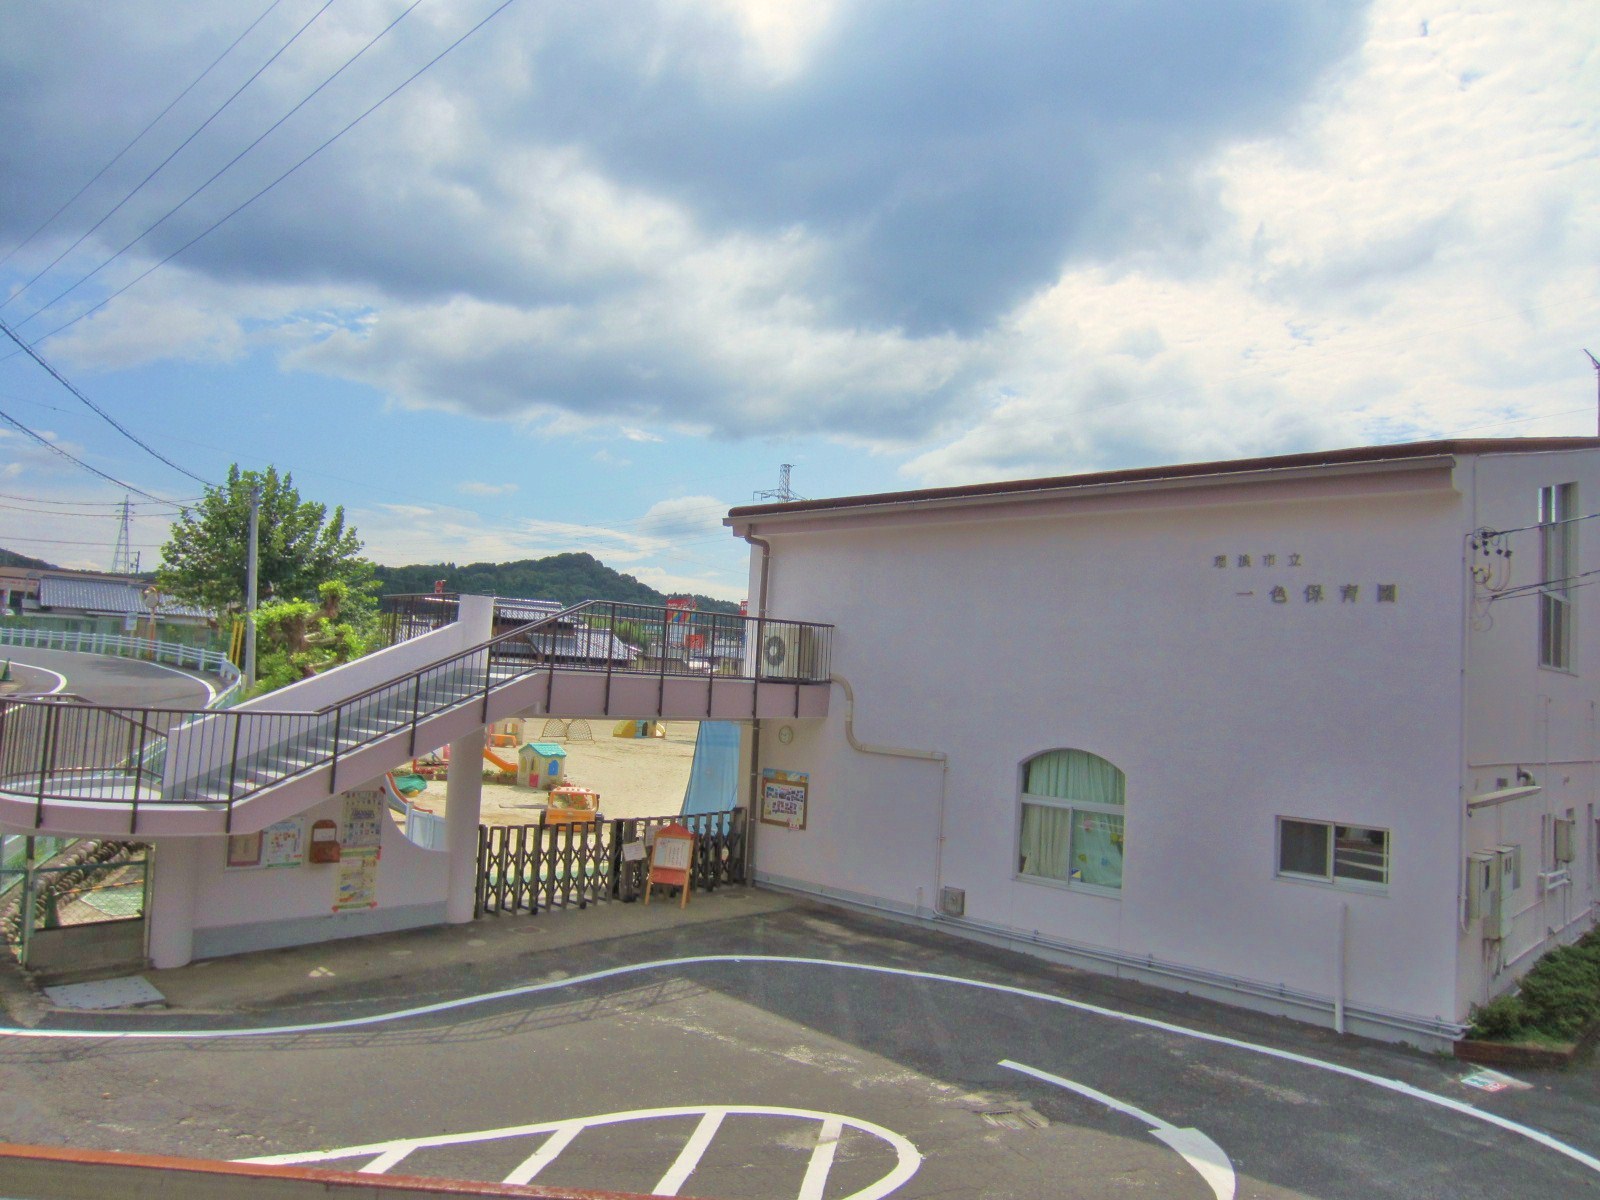 kindergarten ・ Nursery. Mizunami Municipal color nursery school (kindergarten ・ 687m to the nursery)